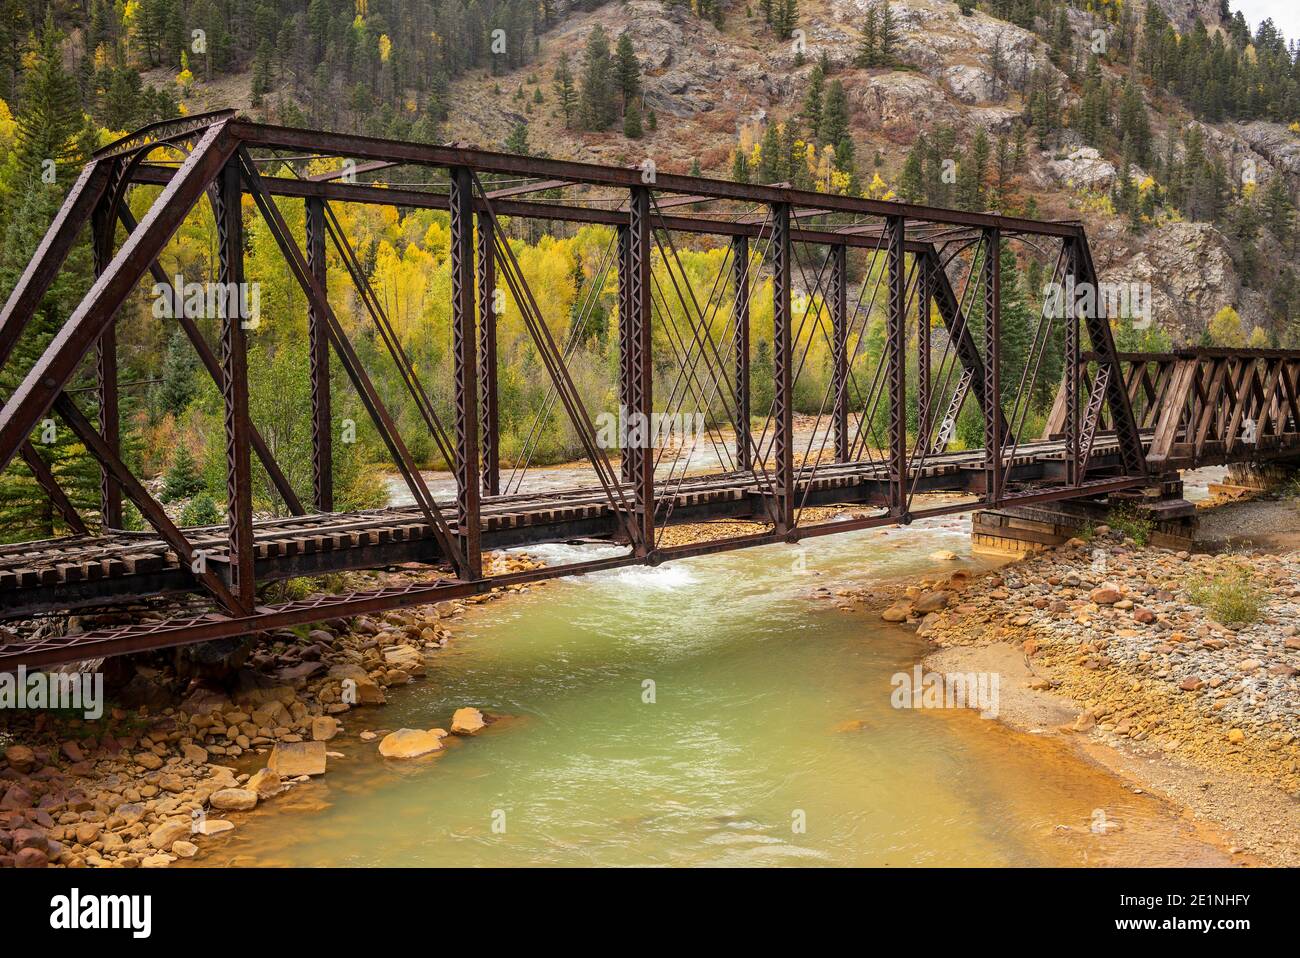 A disused railway bridge, Durango and Silverton Narrow Gauge Railroad, Animas River Valley, San Juan National Forest, Colorado, USA Stock Photo